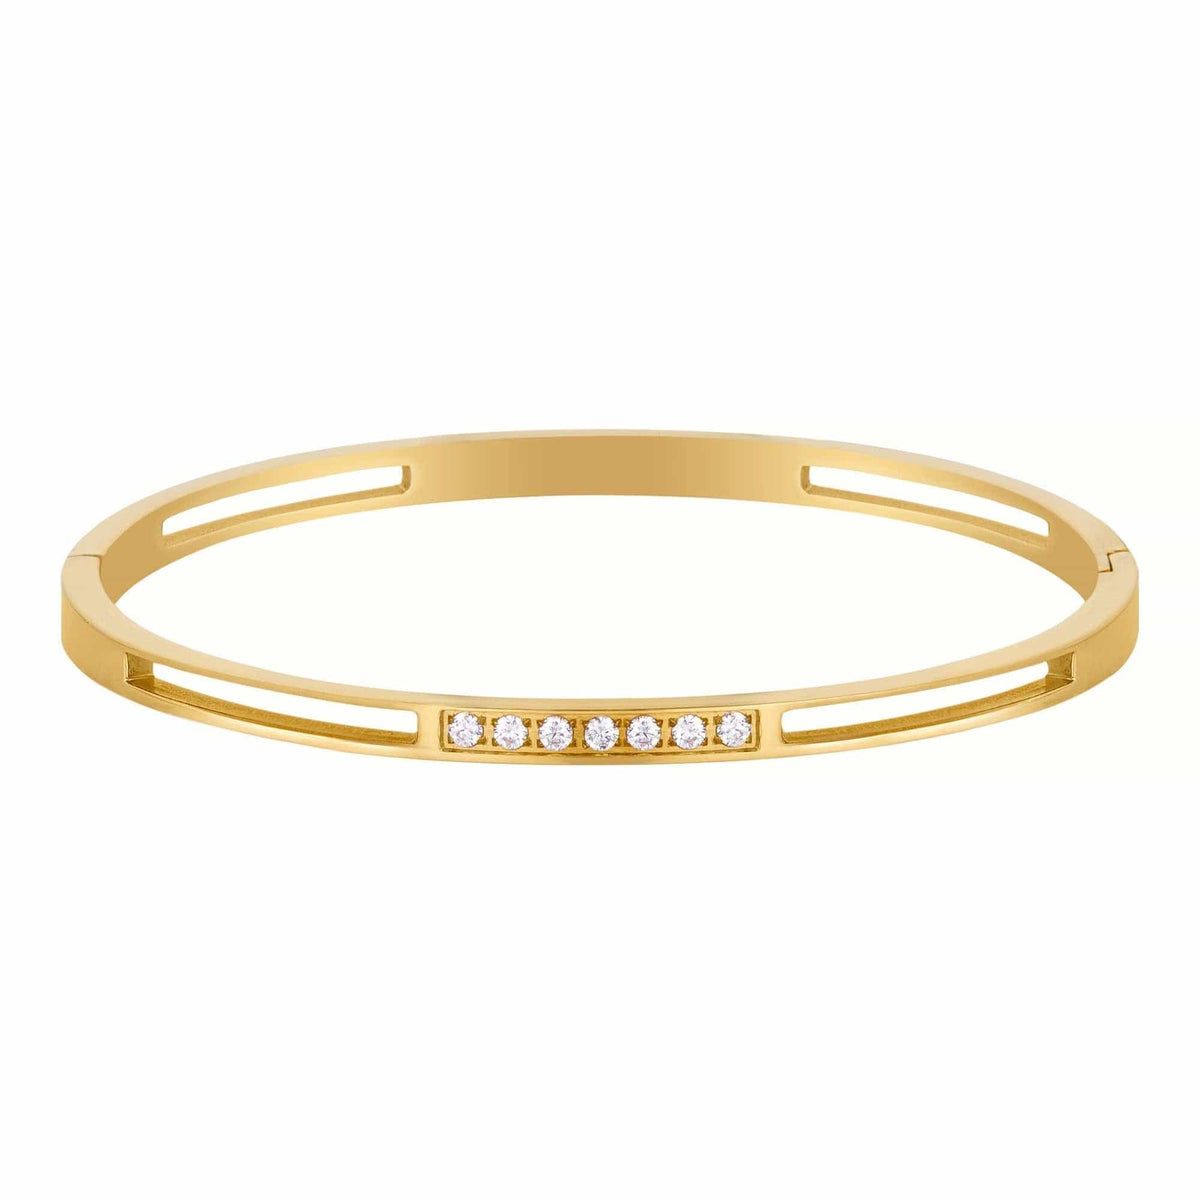 BohoMoon Stainless Steel Yasmine Bracelet Gold